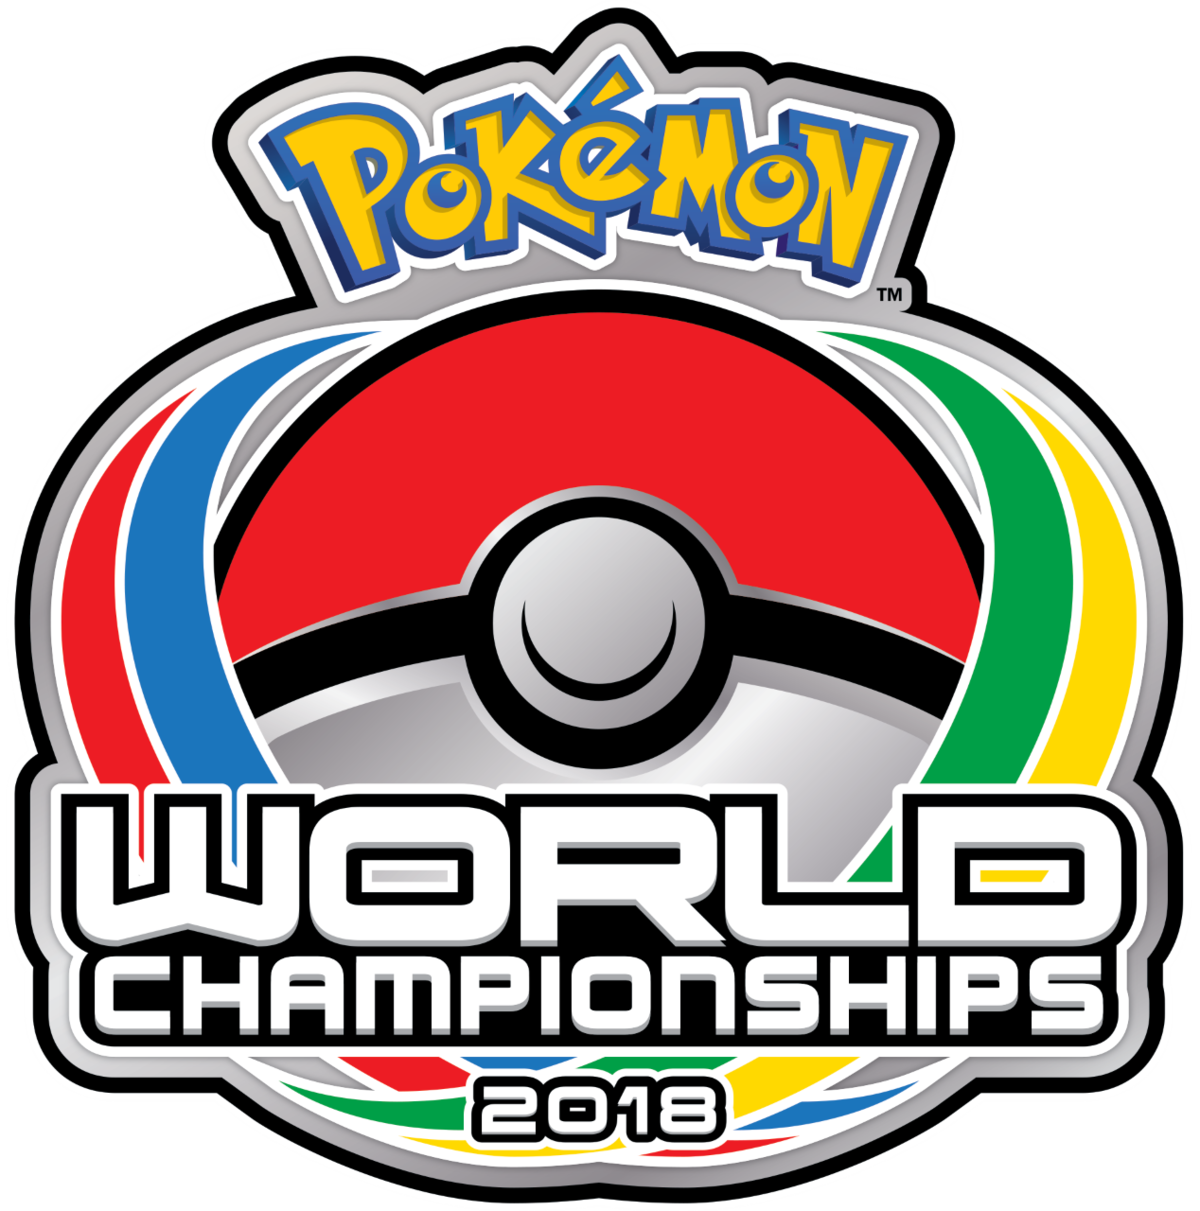 18 World Championships Bulbapedia The Community Driven Pokemon Encyclopedia